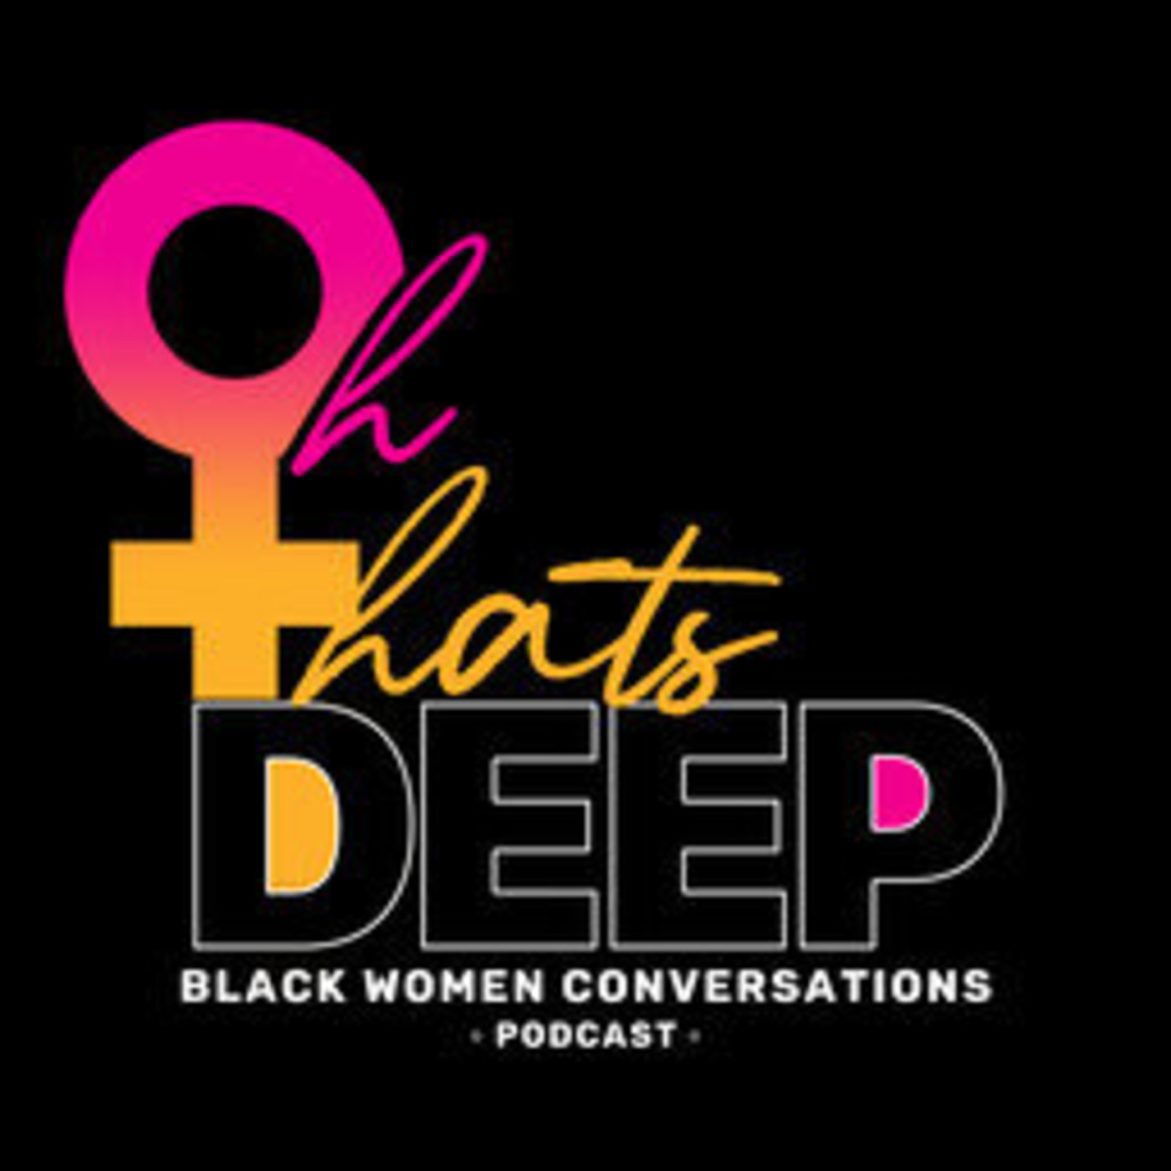 Black Podcasting - Parents Provoke Not Your Children